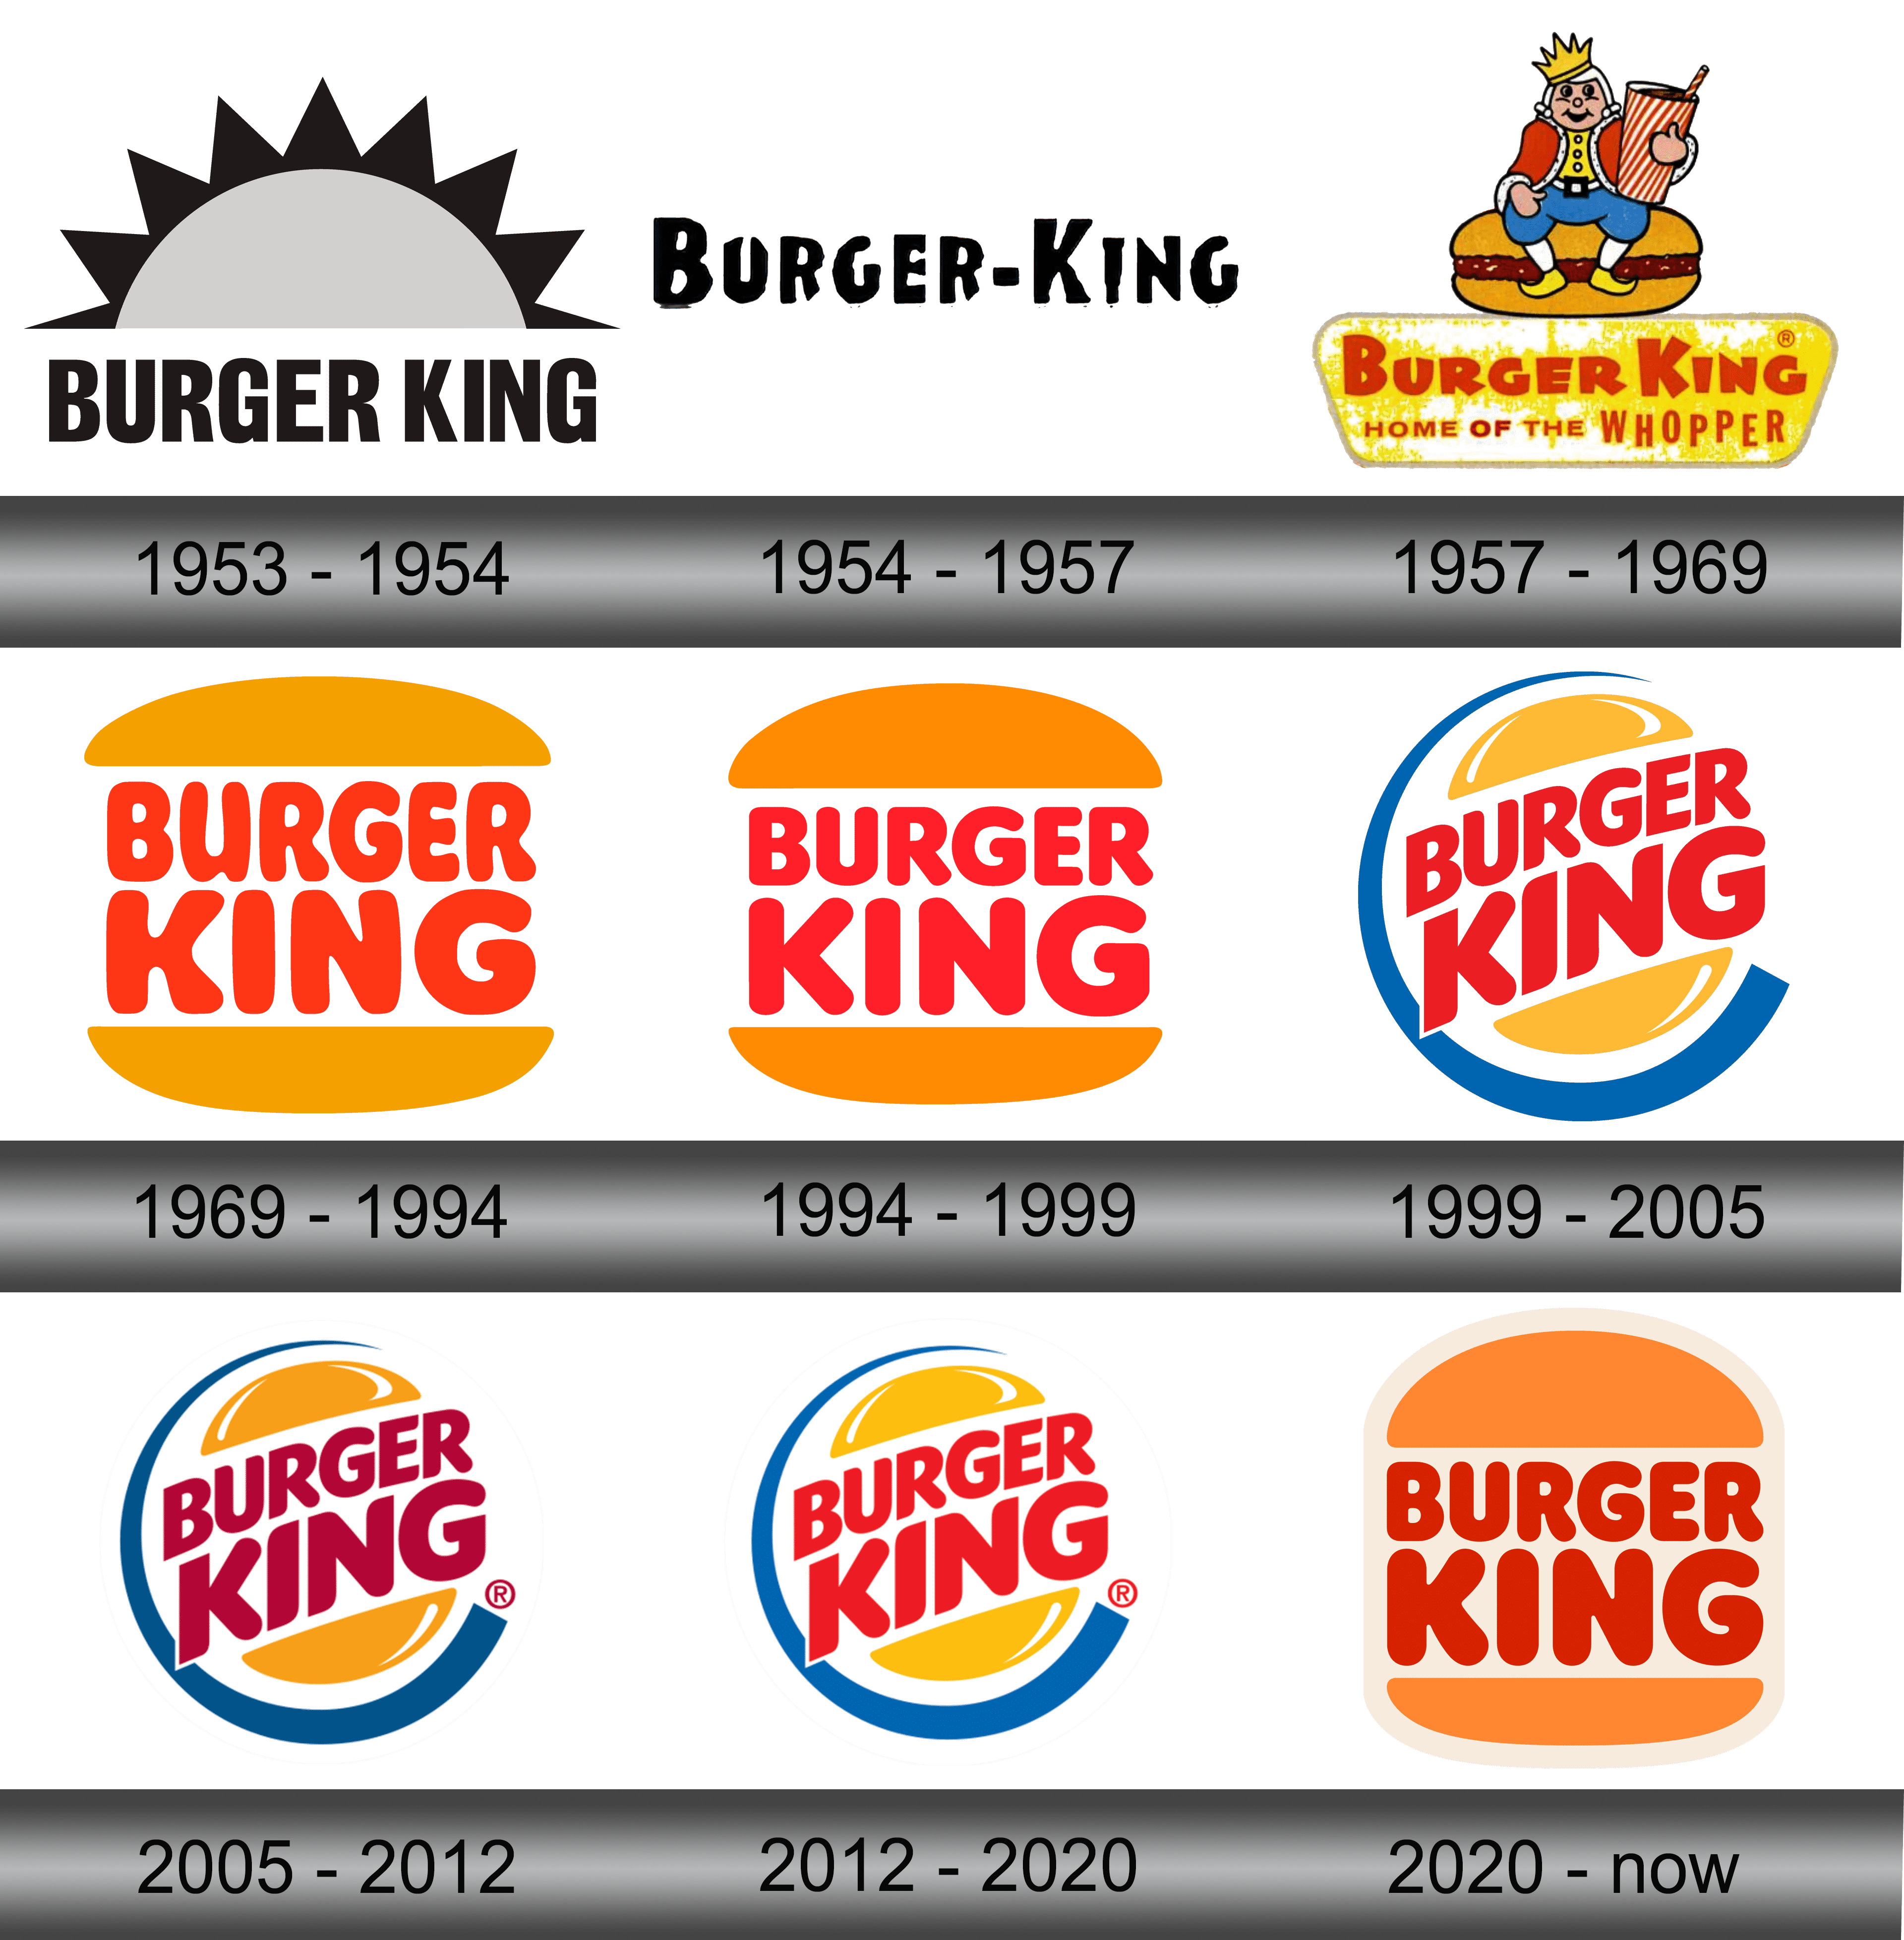 Burger King Logopedia Home Design Ideas